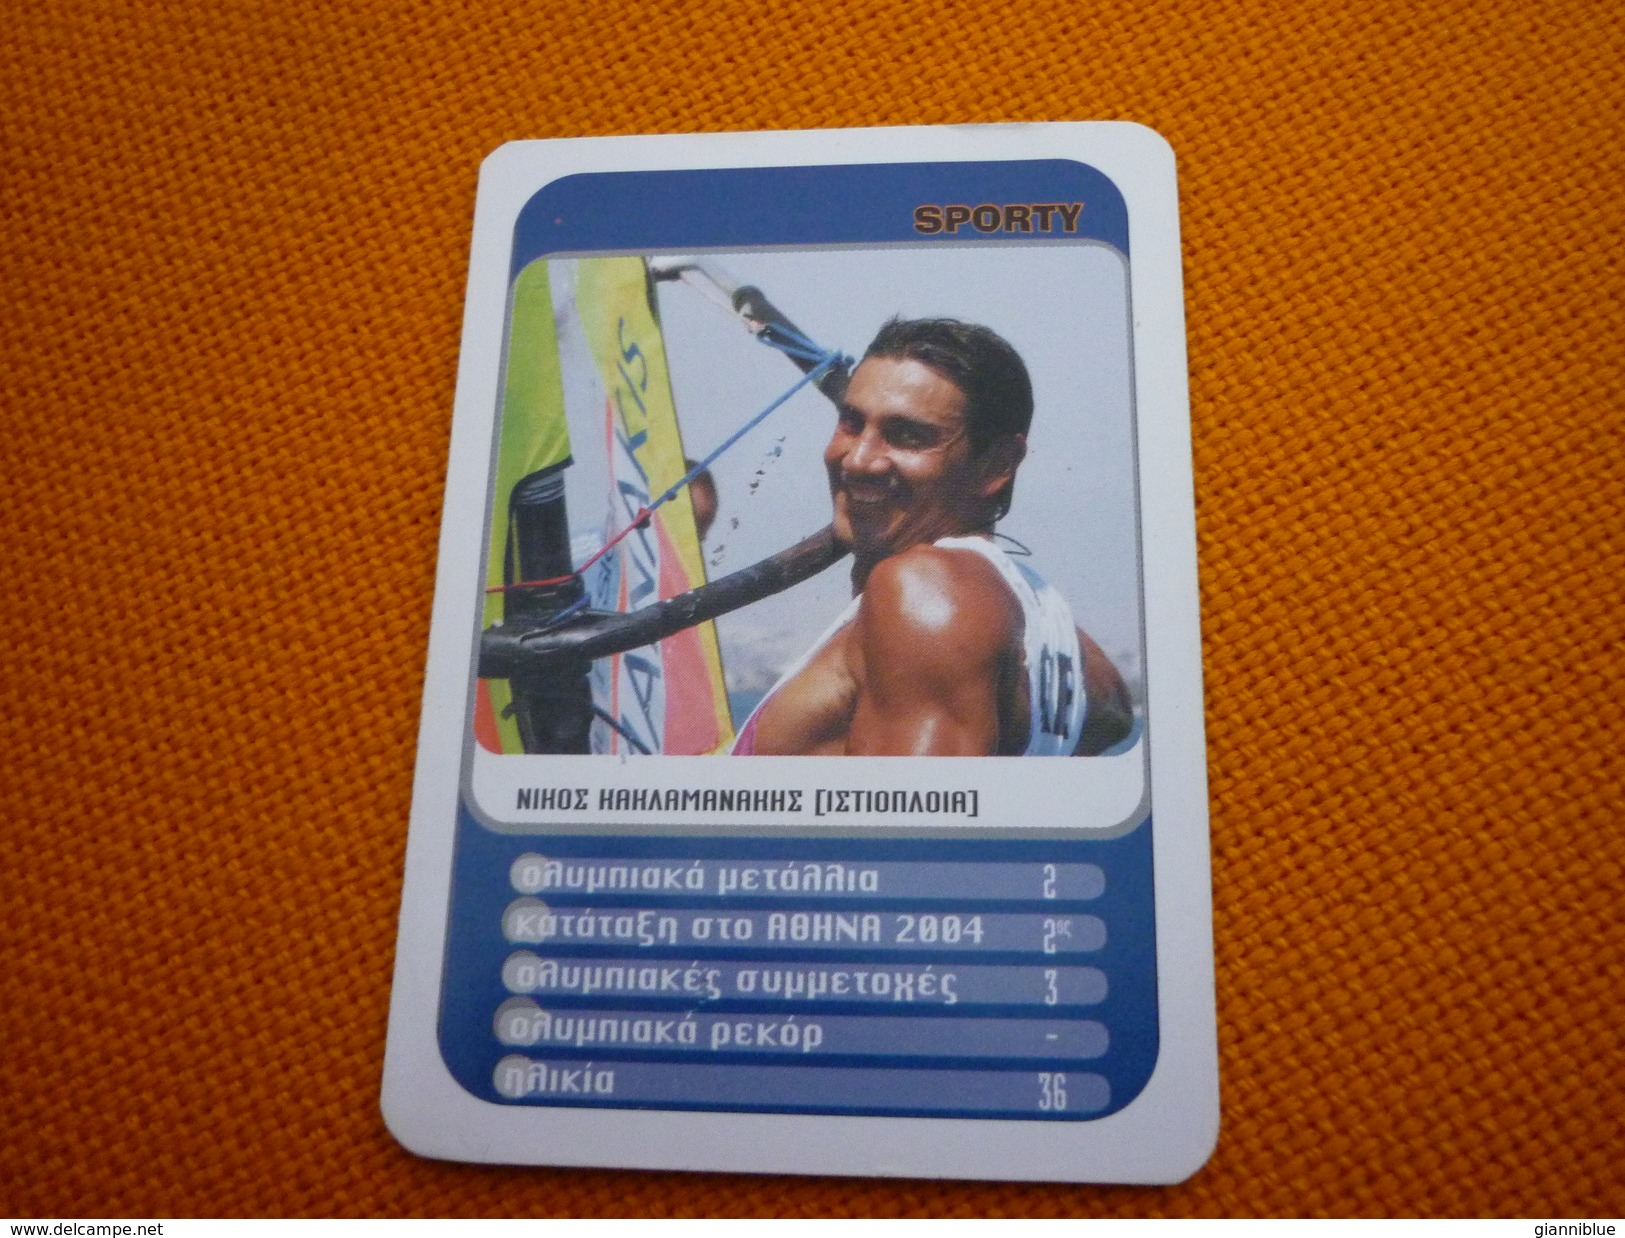 Nikolaos Kaklamanakis Greek Sailboard Athens 2004 Olympic Games Medalist Greece Greek Trading Card - Trading Cards